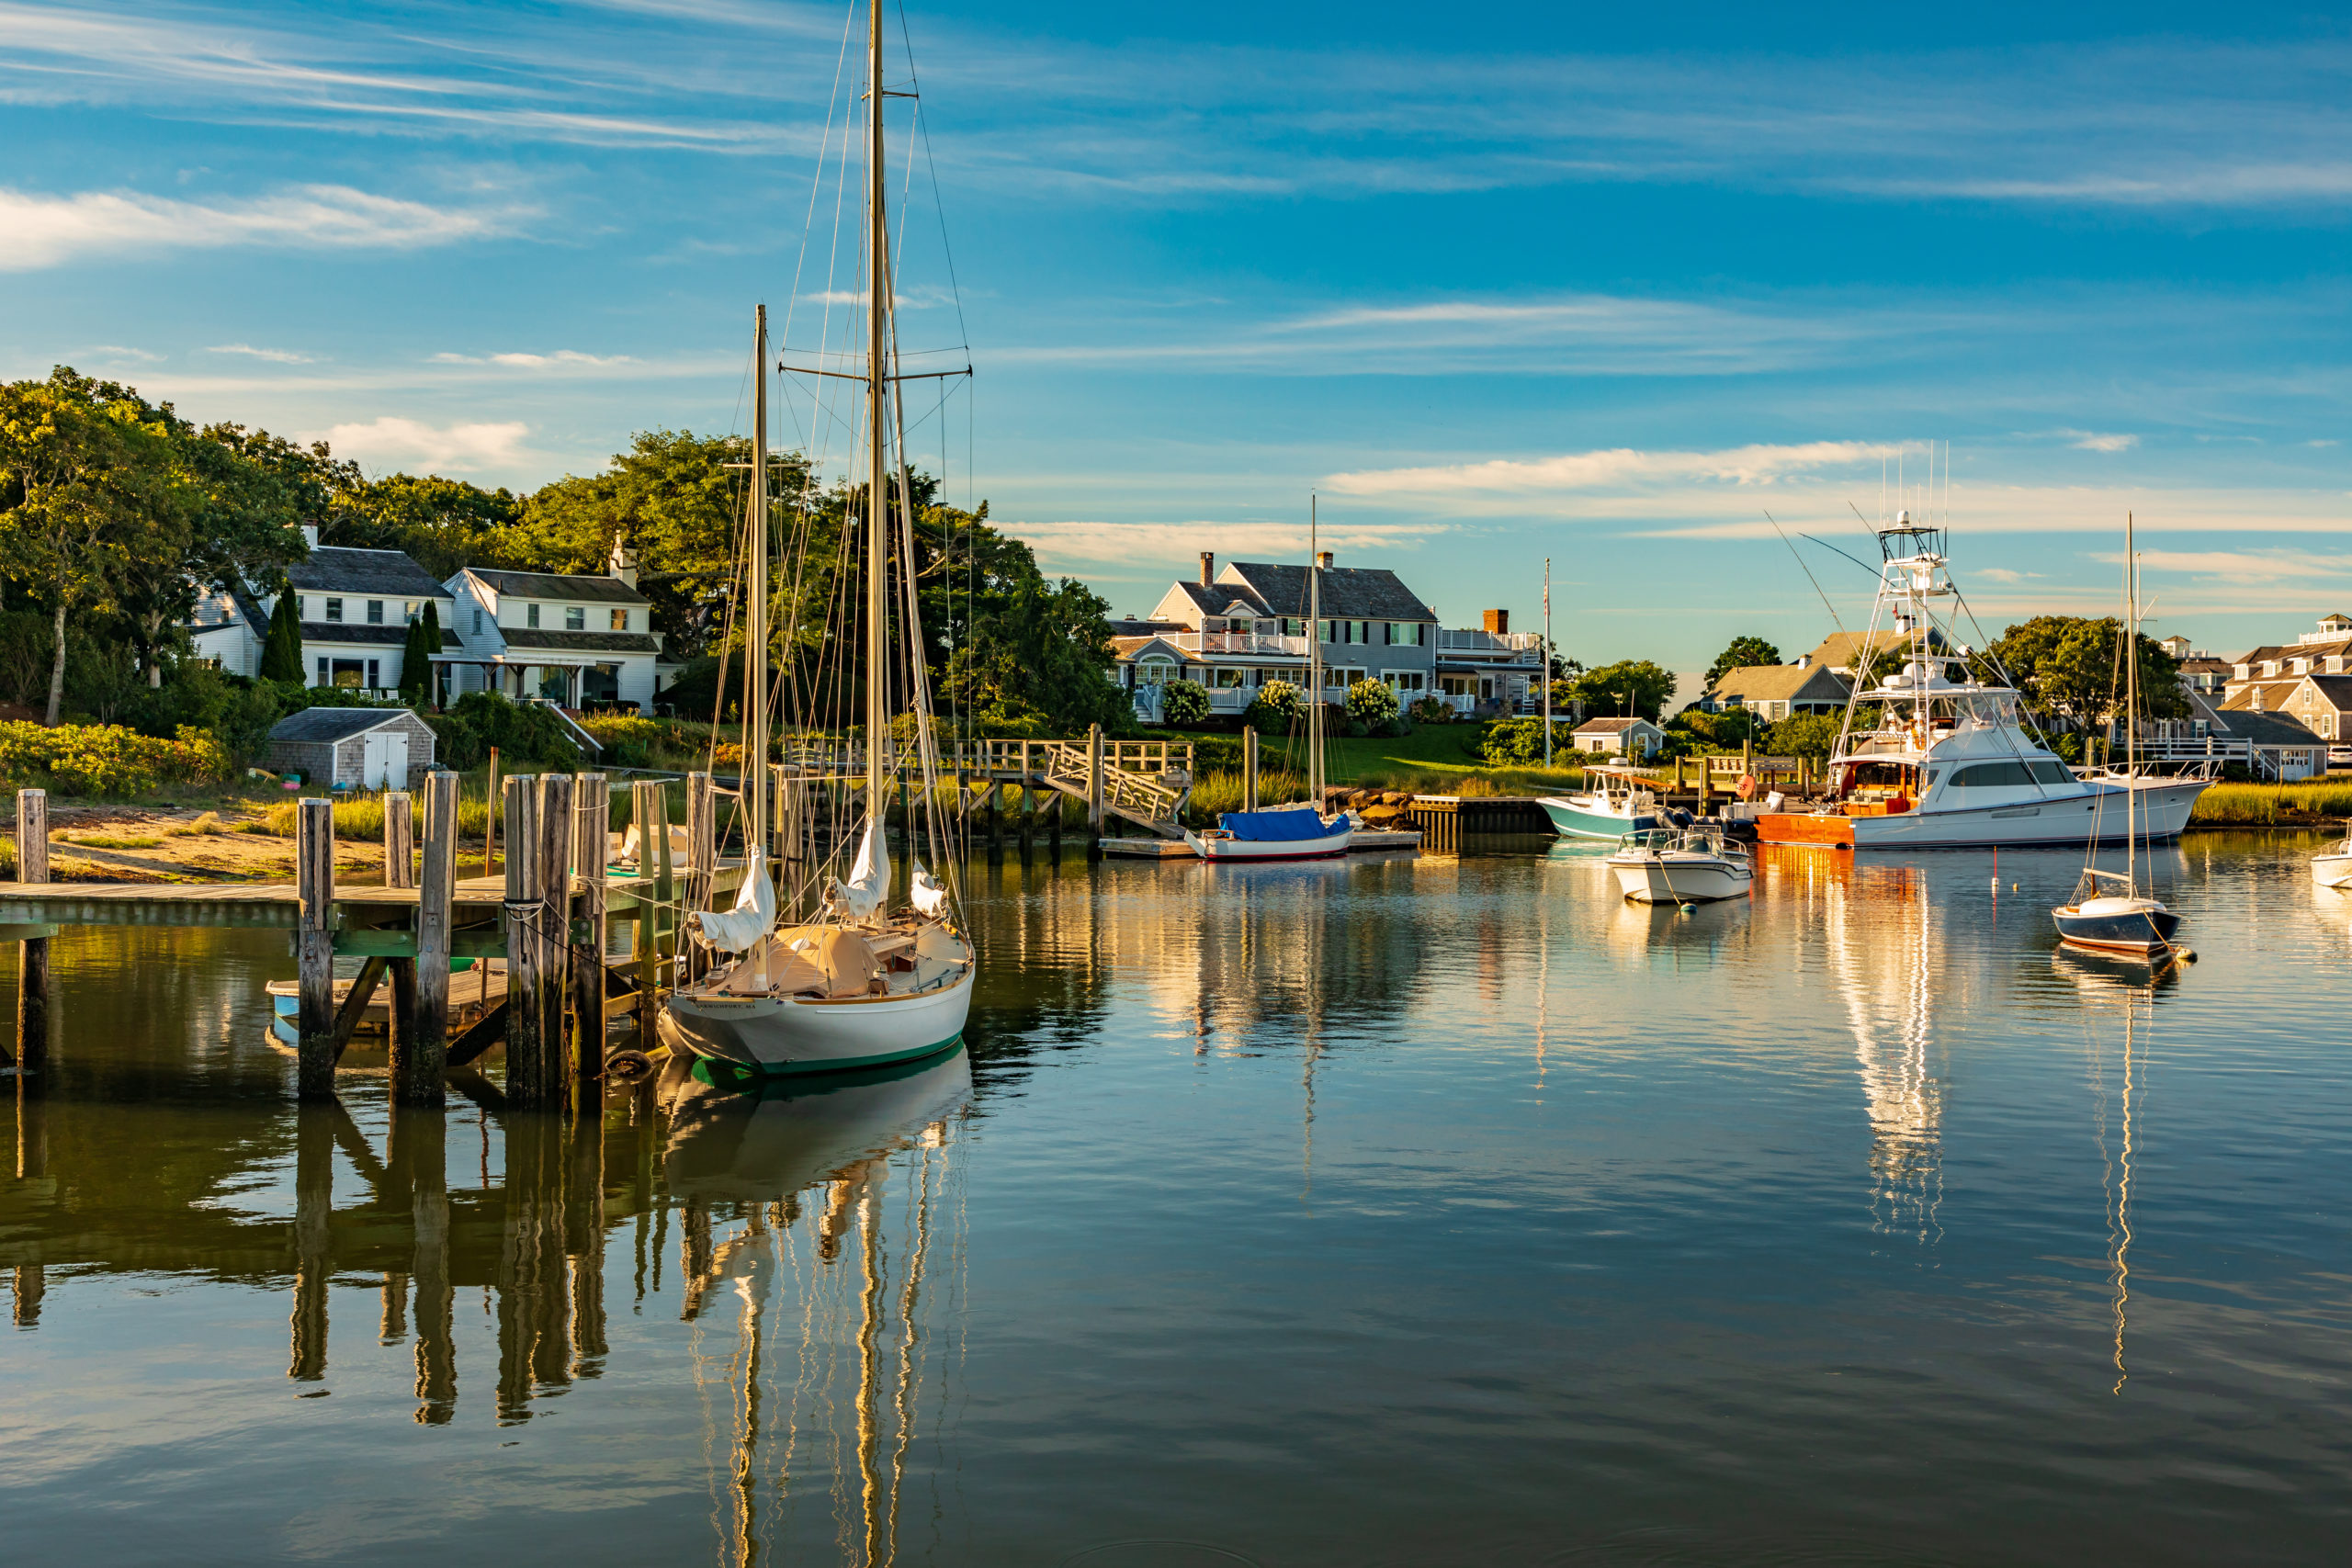 Wychmere Harbor, Harwich, Cape Cod, Massachusetts